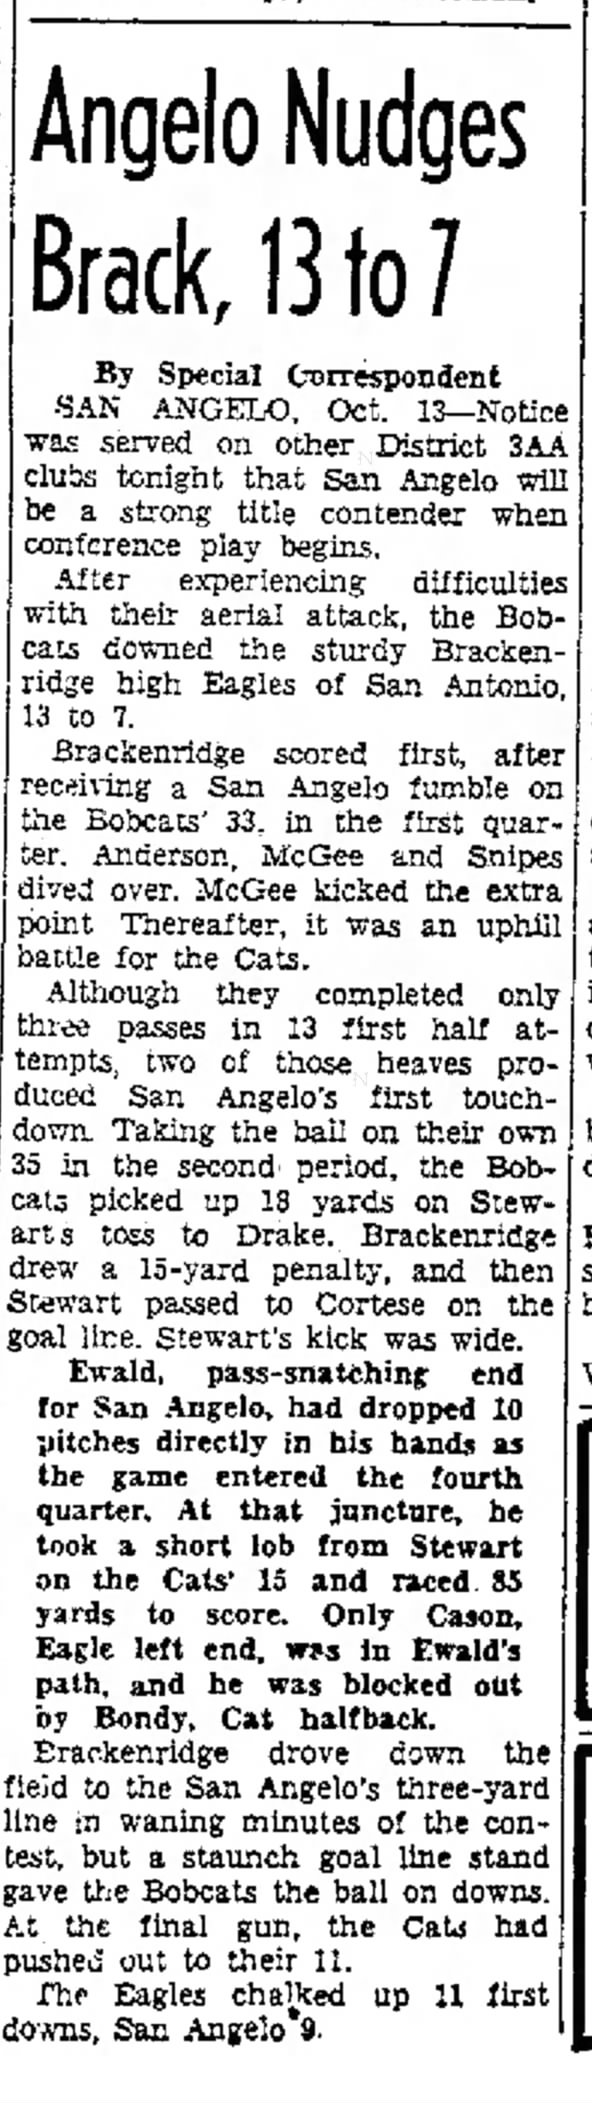 Abilene Reporter-News, Abilene, Texas, 14 Oct 1939 - Floyd Bondy